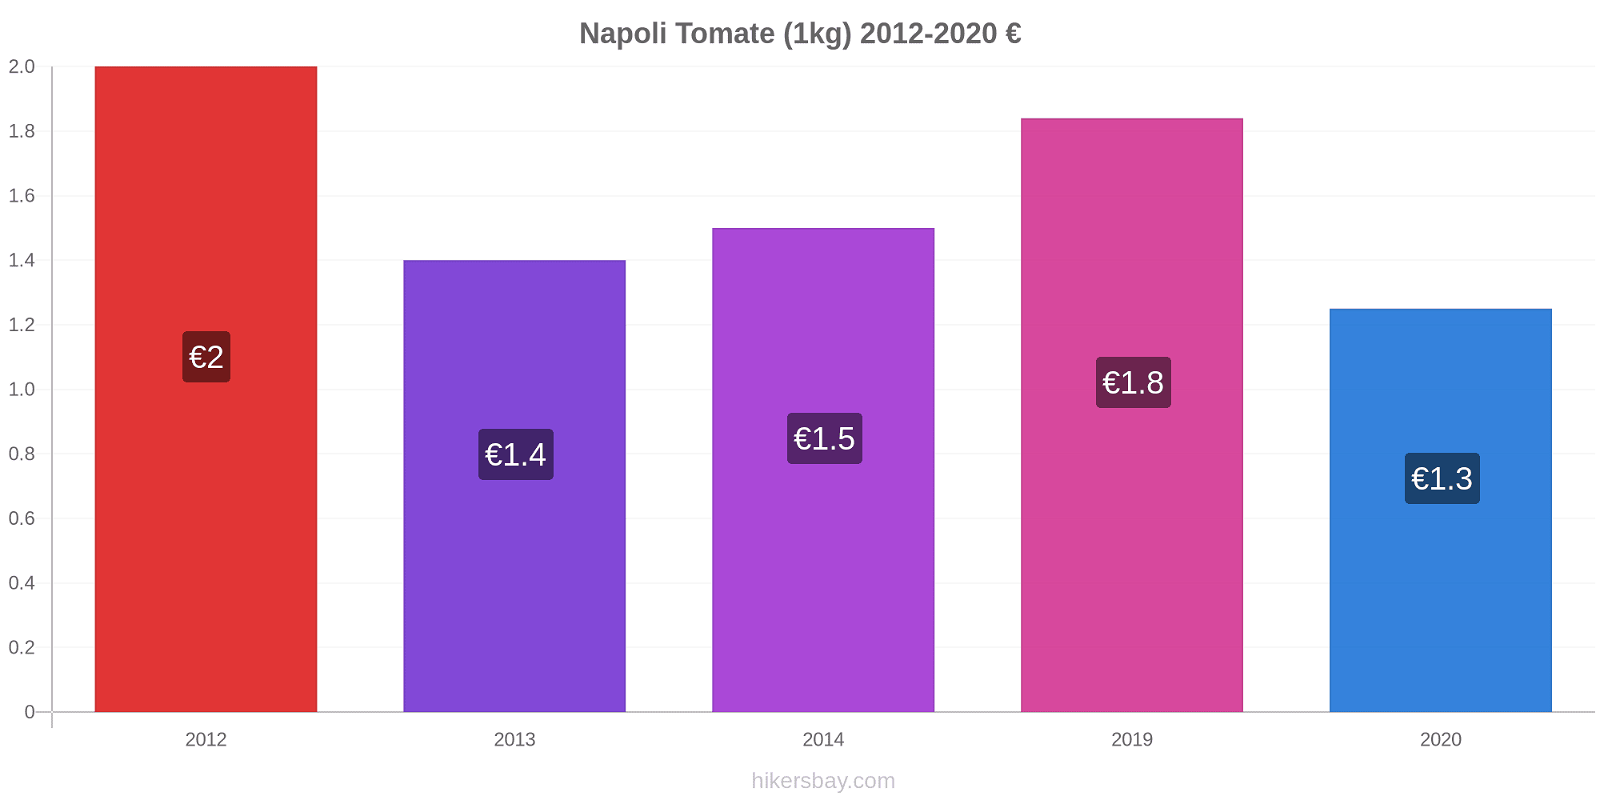 Napoli modificări de preț Tomate (1kg) hikersbay.com